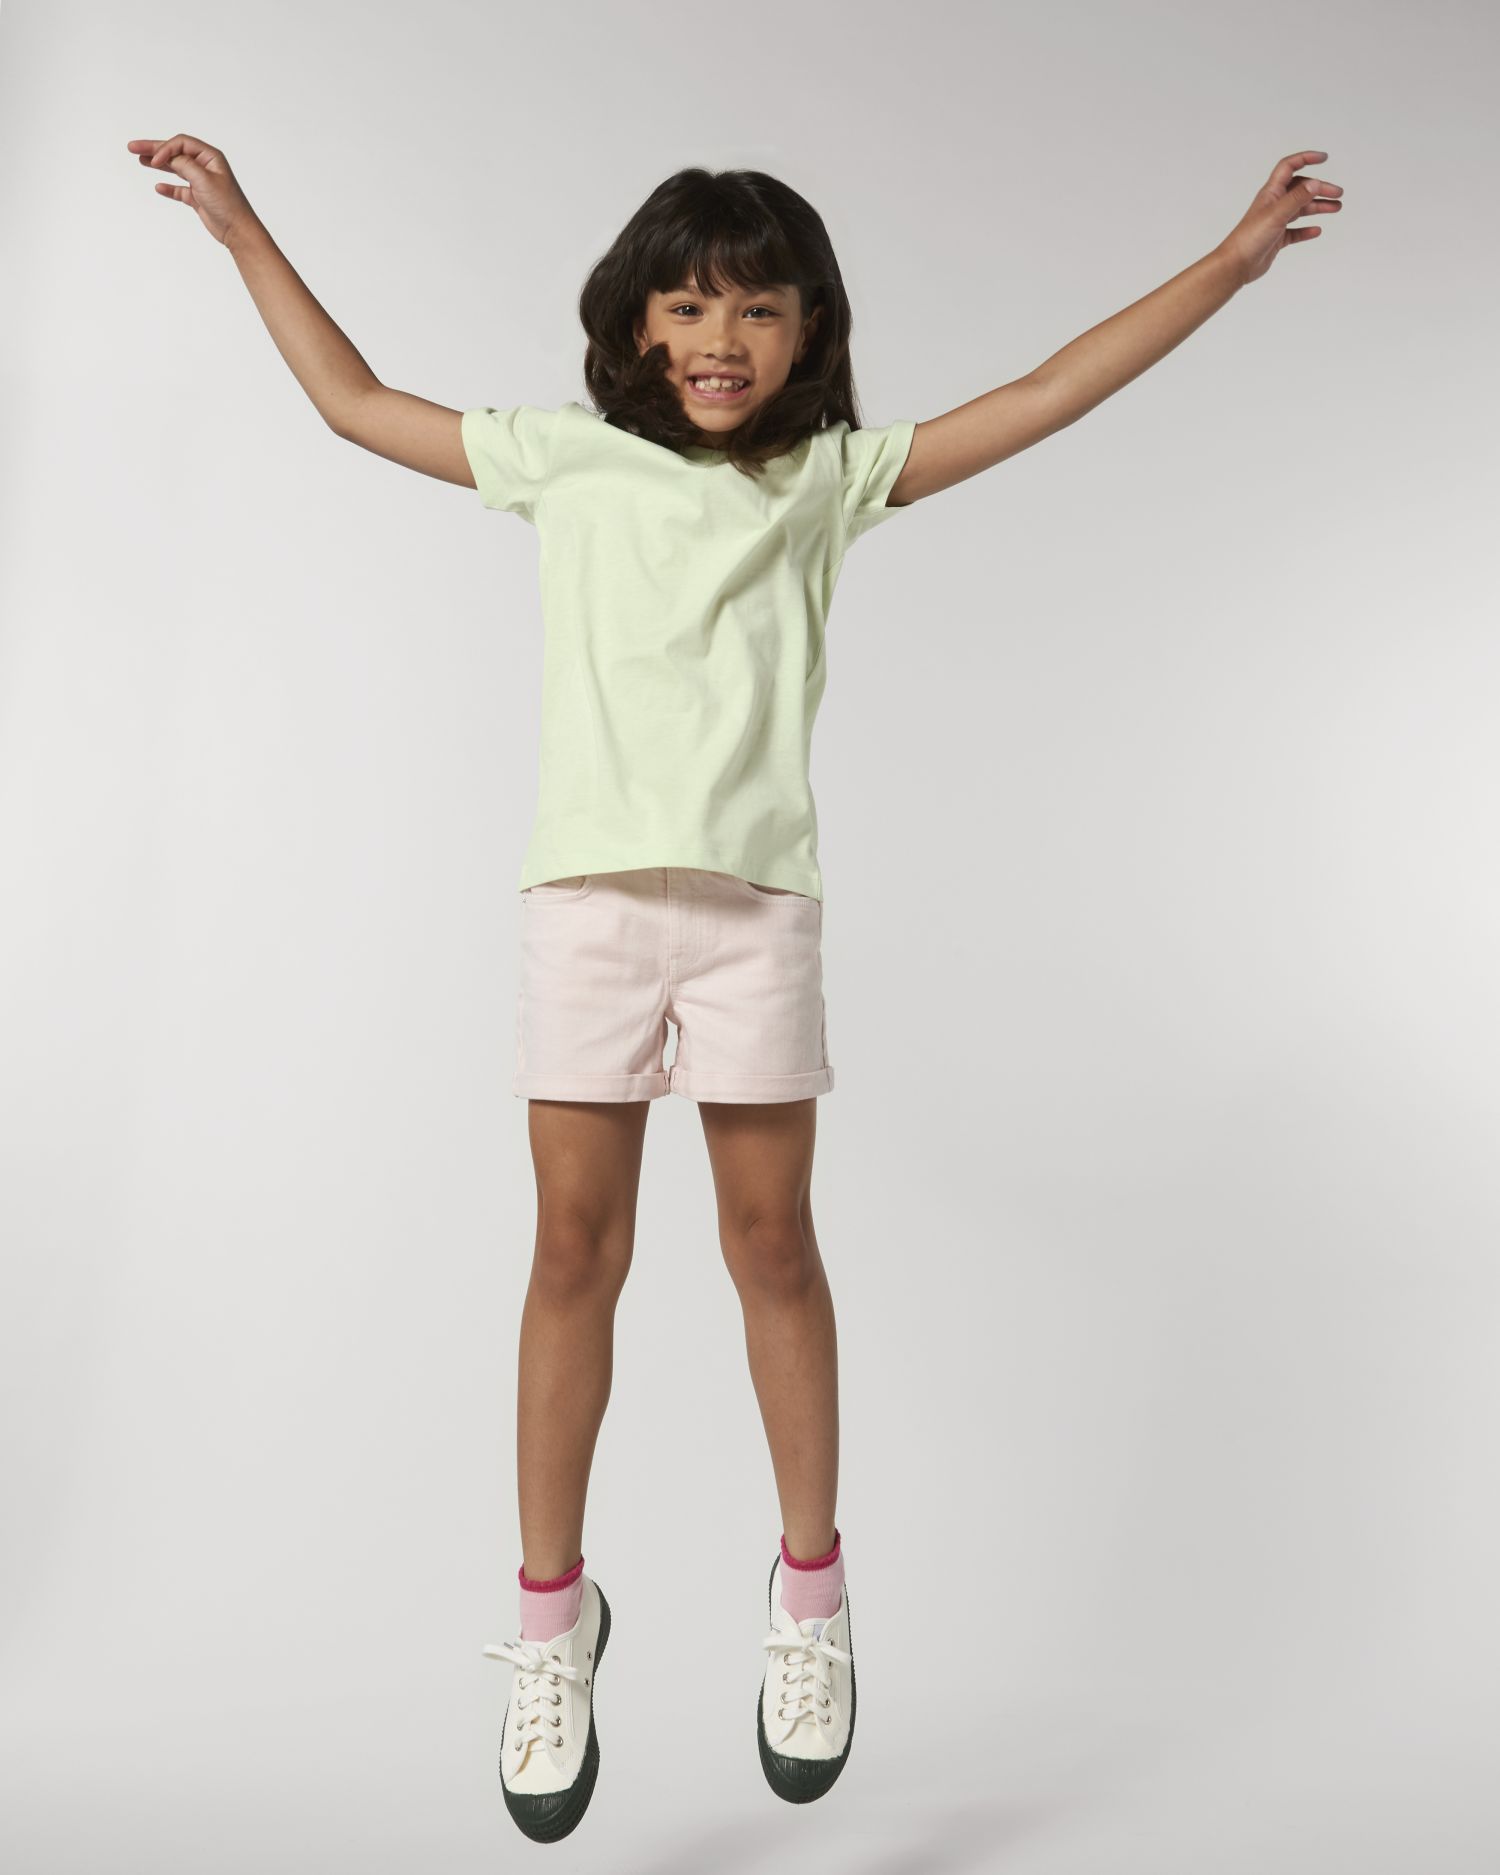 Kids T-Shirt Mini Creator in Farbe Stem Green